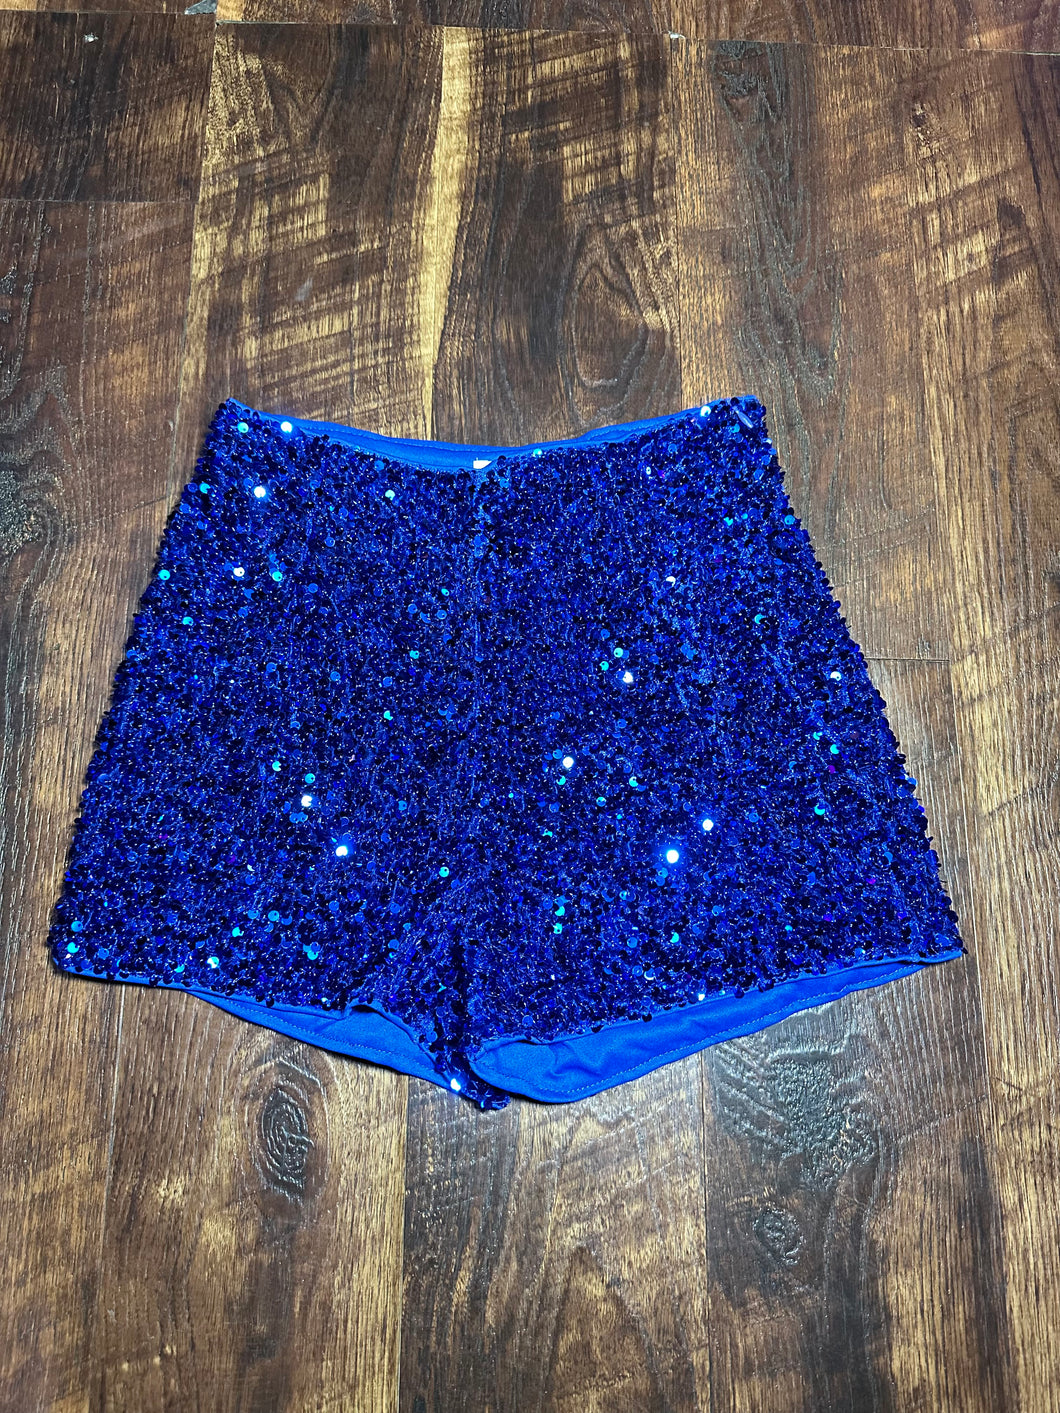 Blue Sequin Shorts